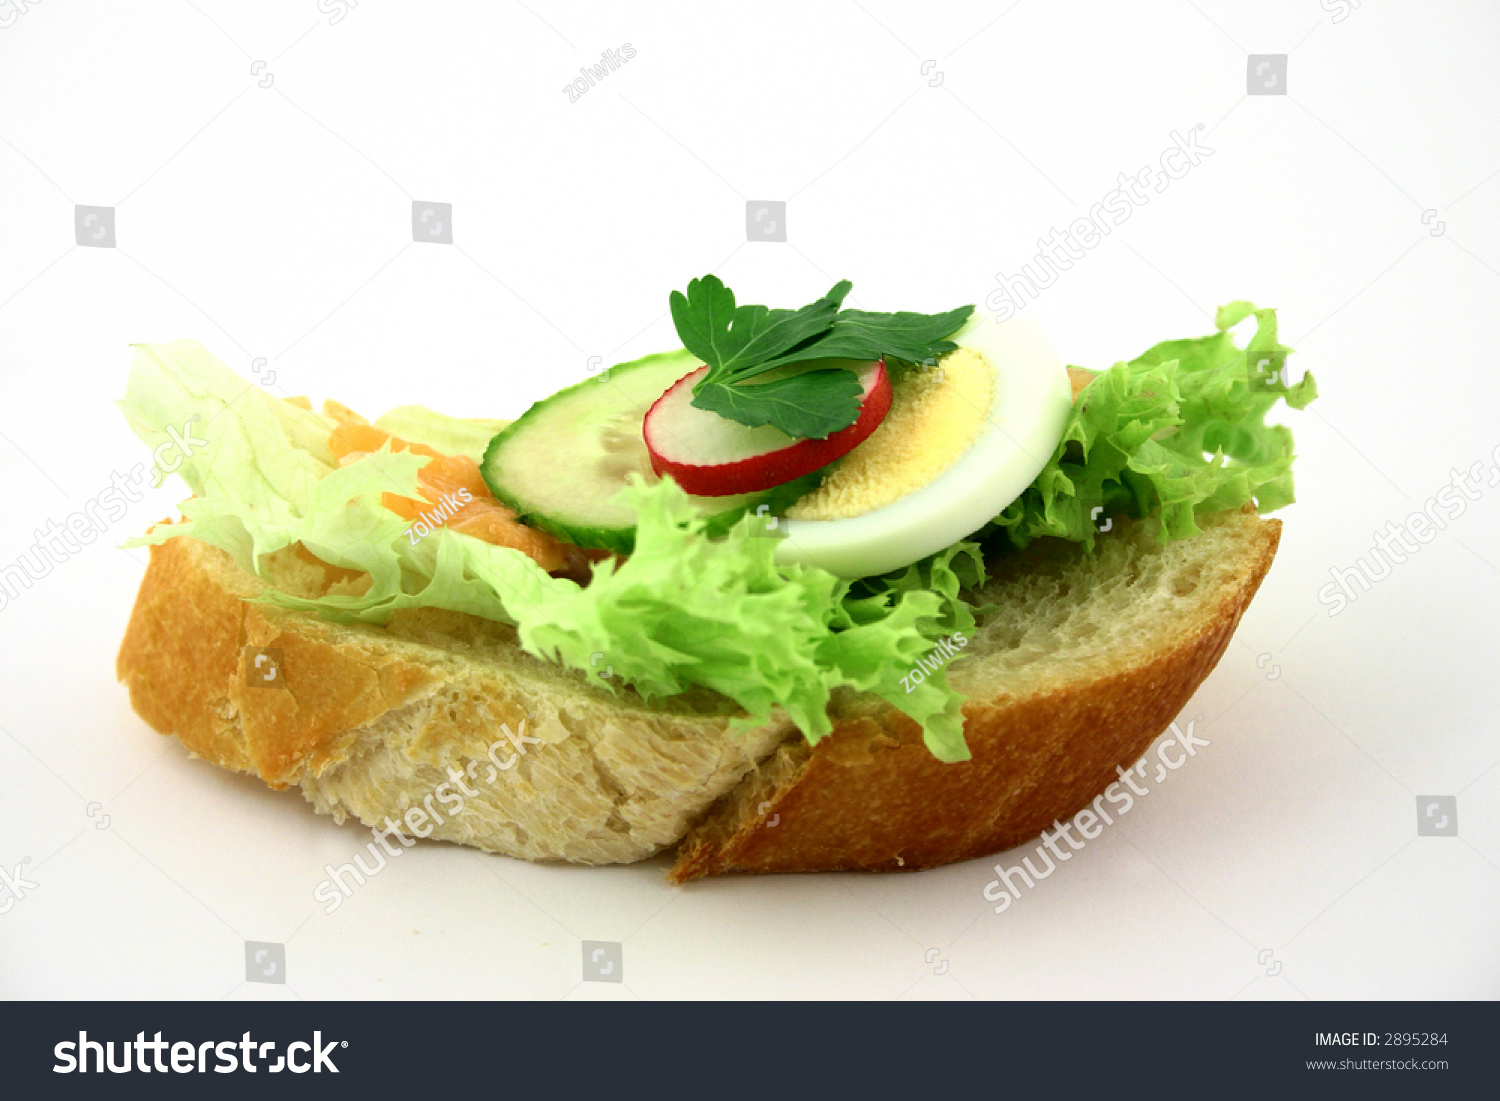 Fresh Sandwich With Salmon, Iceberg Lettuce, Radish, Cucumber, Piece Of ...